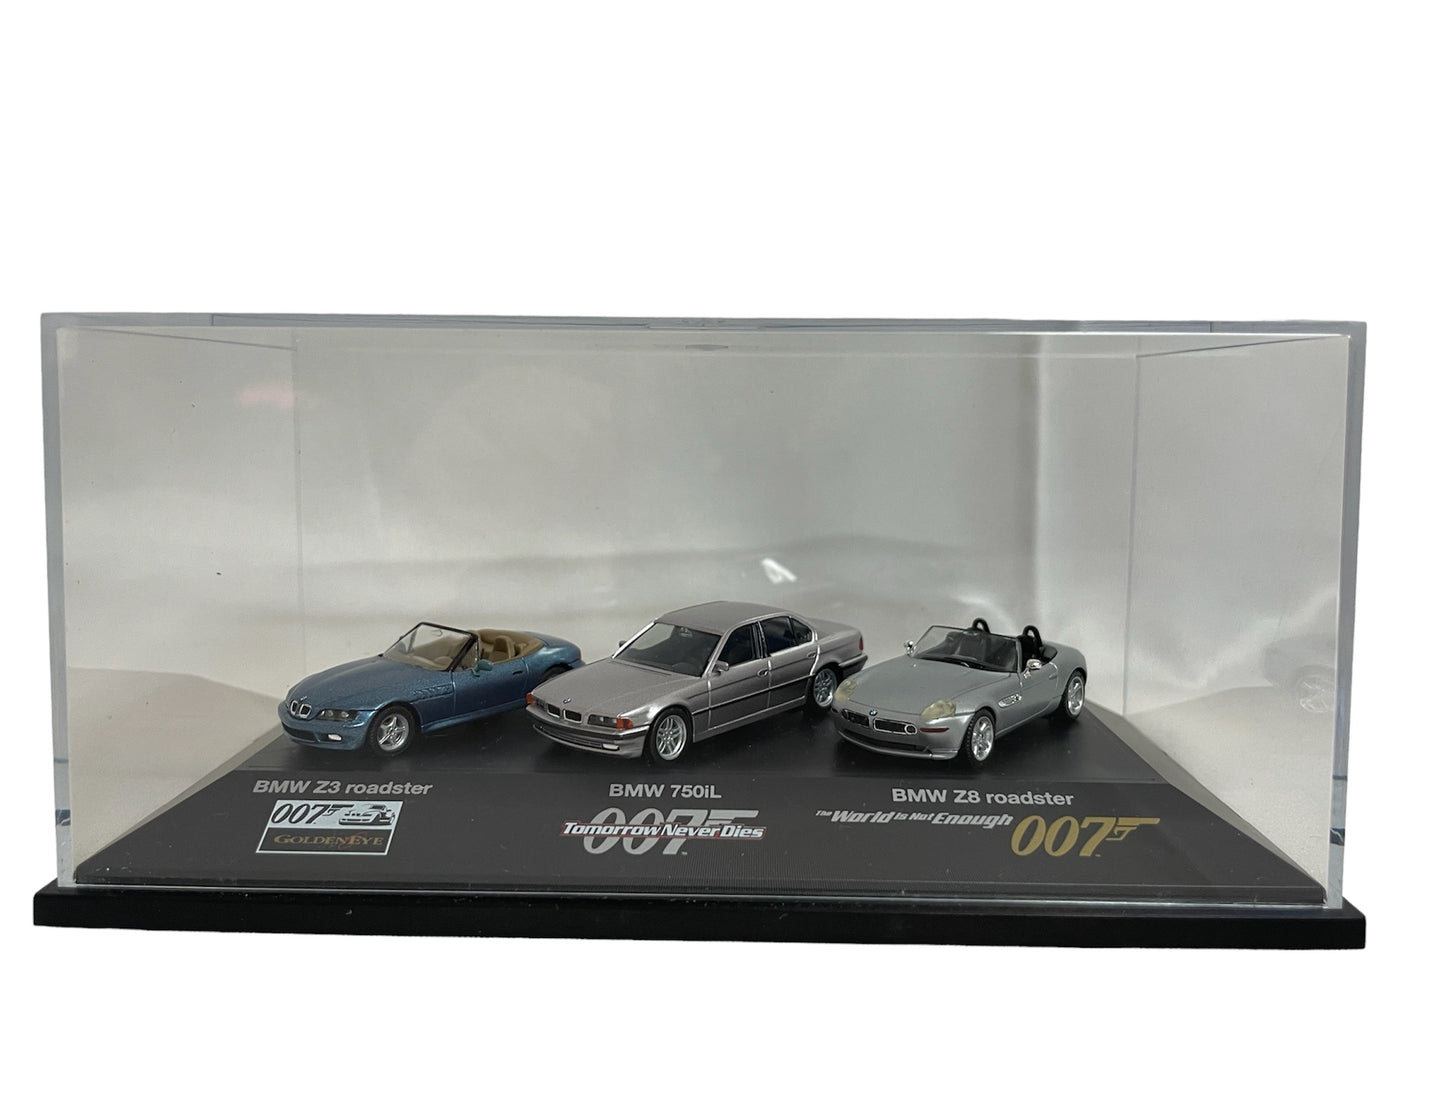 Vintage 2000 Edition James 007 Bond Drives BM Dealership Set Of 3 Mini Die-Cast Vehicles In Display Case - Z3 Roadster / 750iL / Z8 Roadster